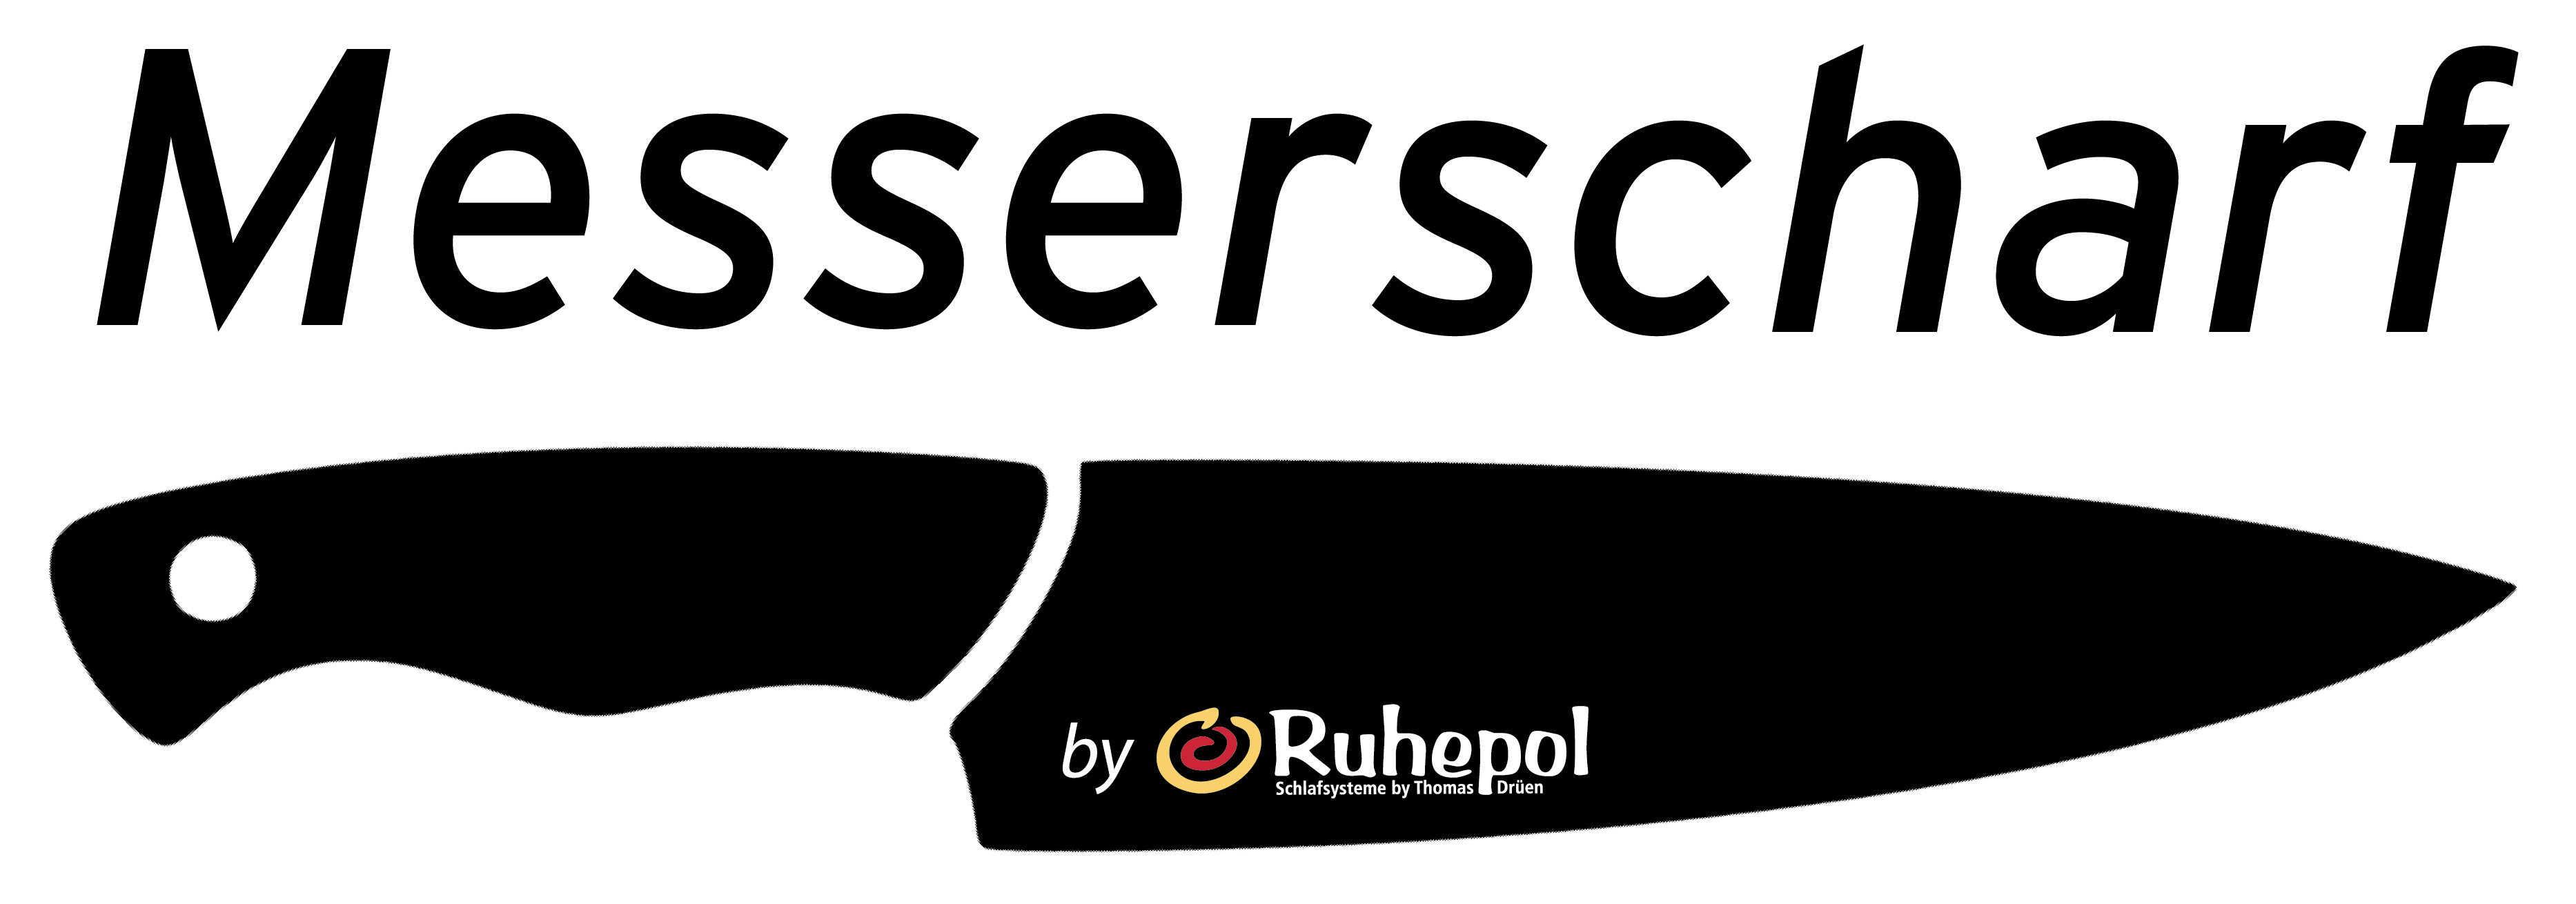 Messerscharf by Ruhepol